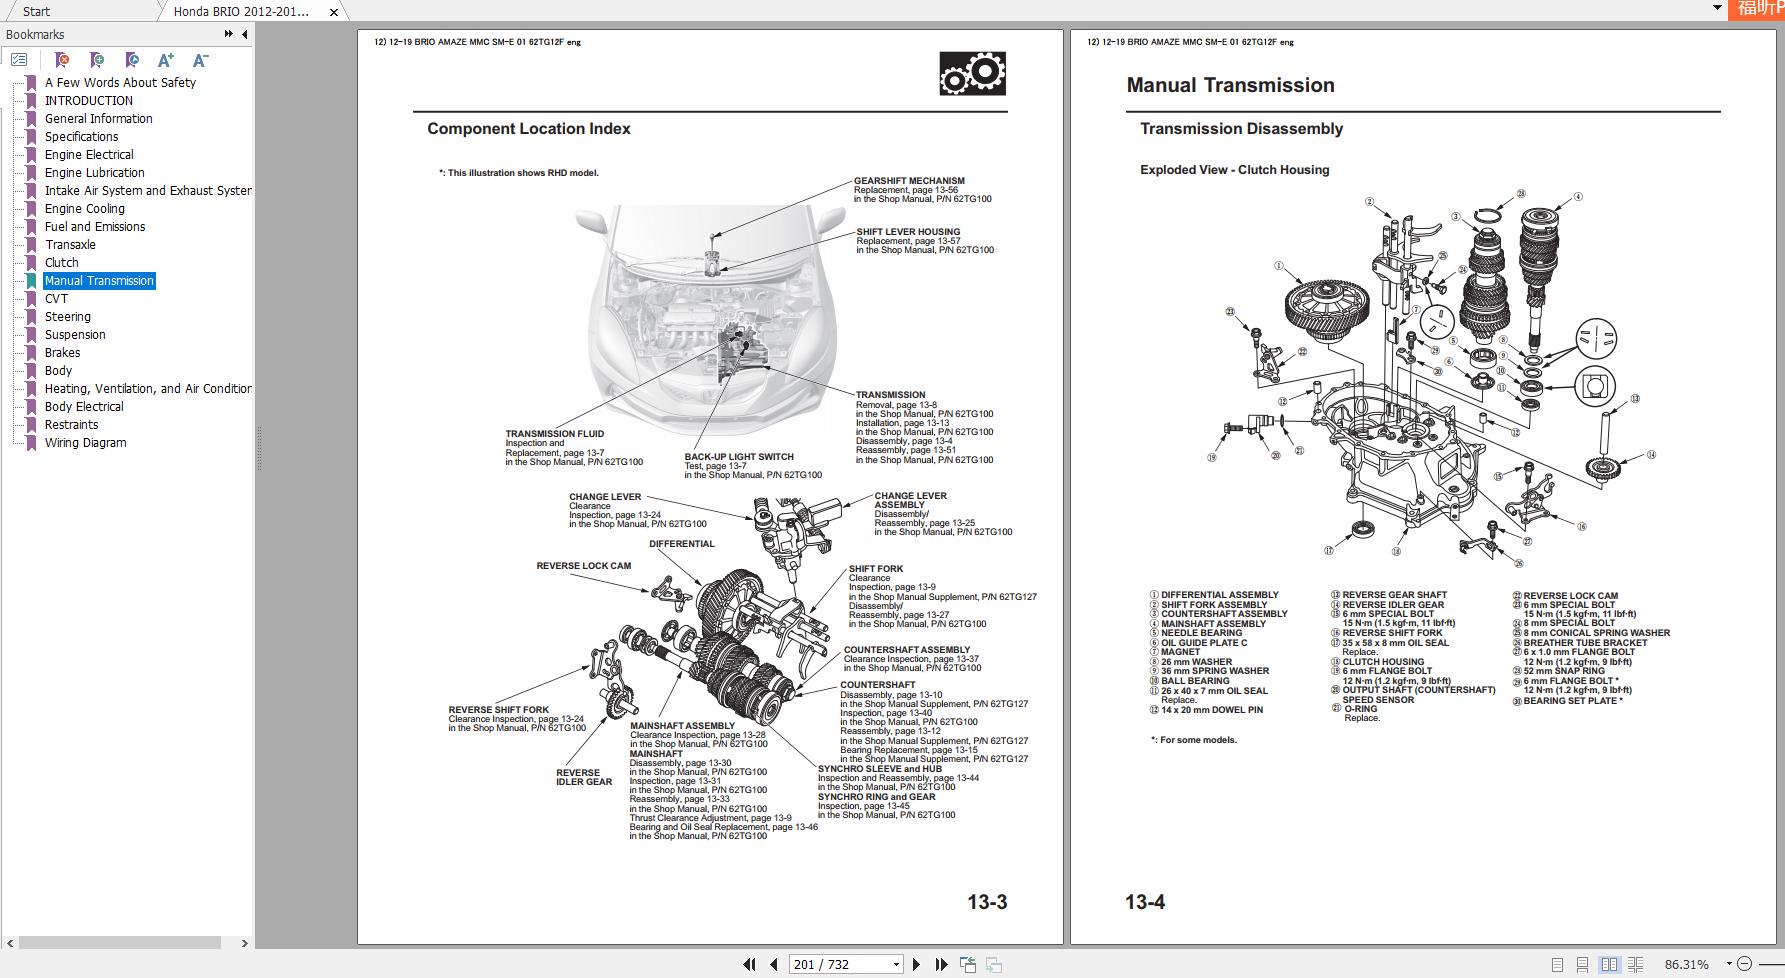 Honda BRIO 2012-2019 Workshop Manual | Auto Repair Manual Forum - Heavy